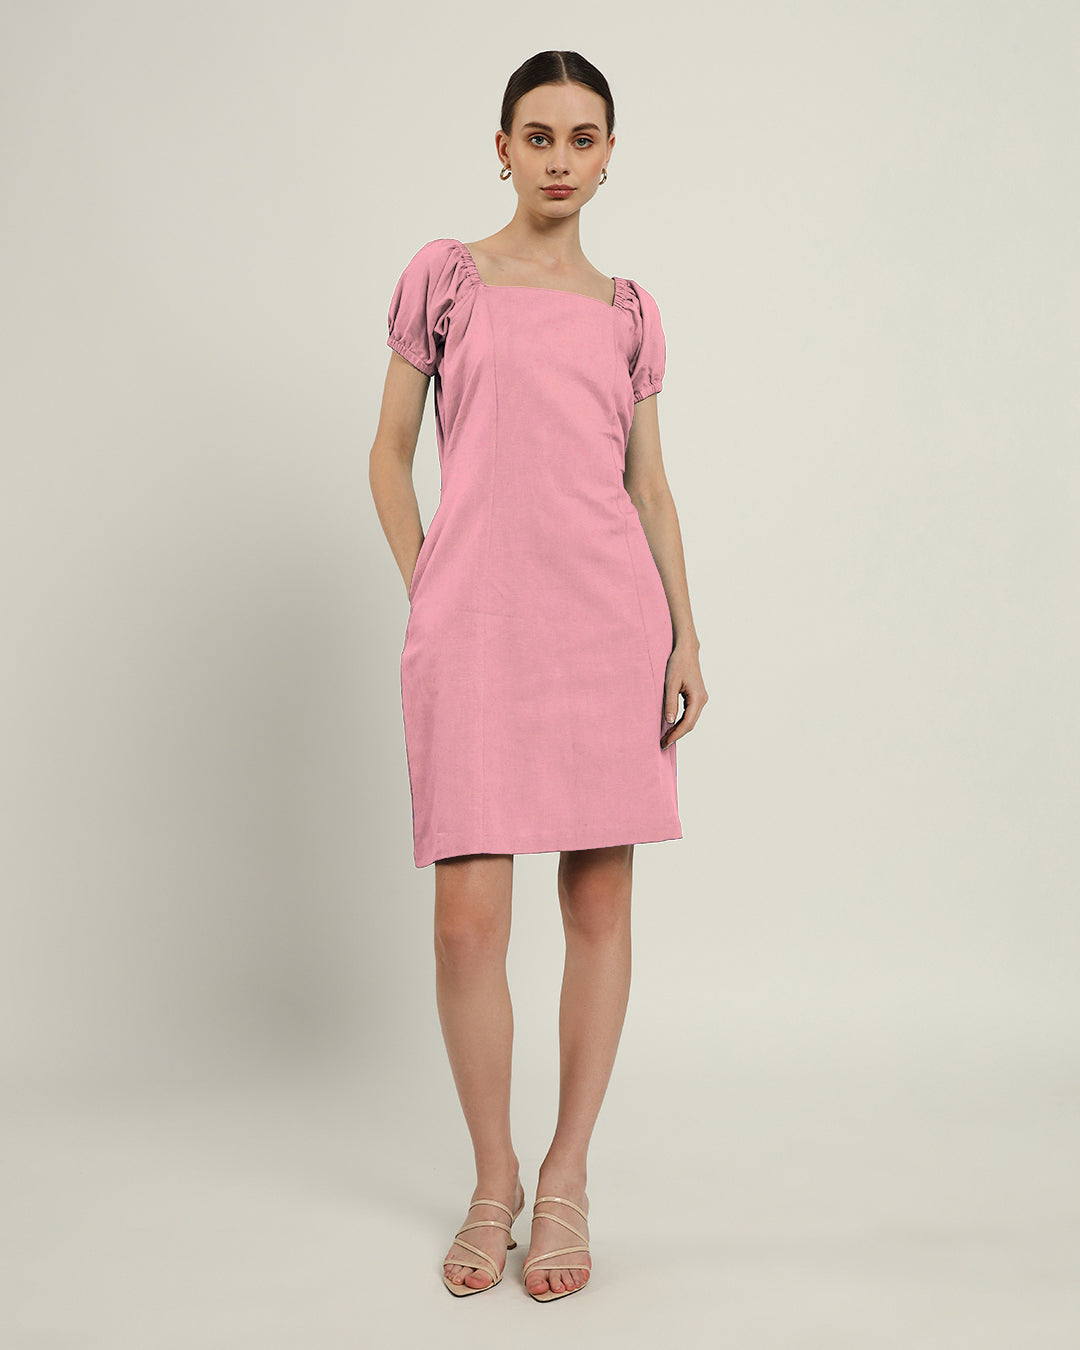 The Arar Fondant Pink Cotton Dress